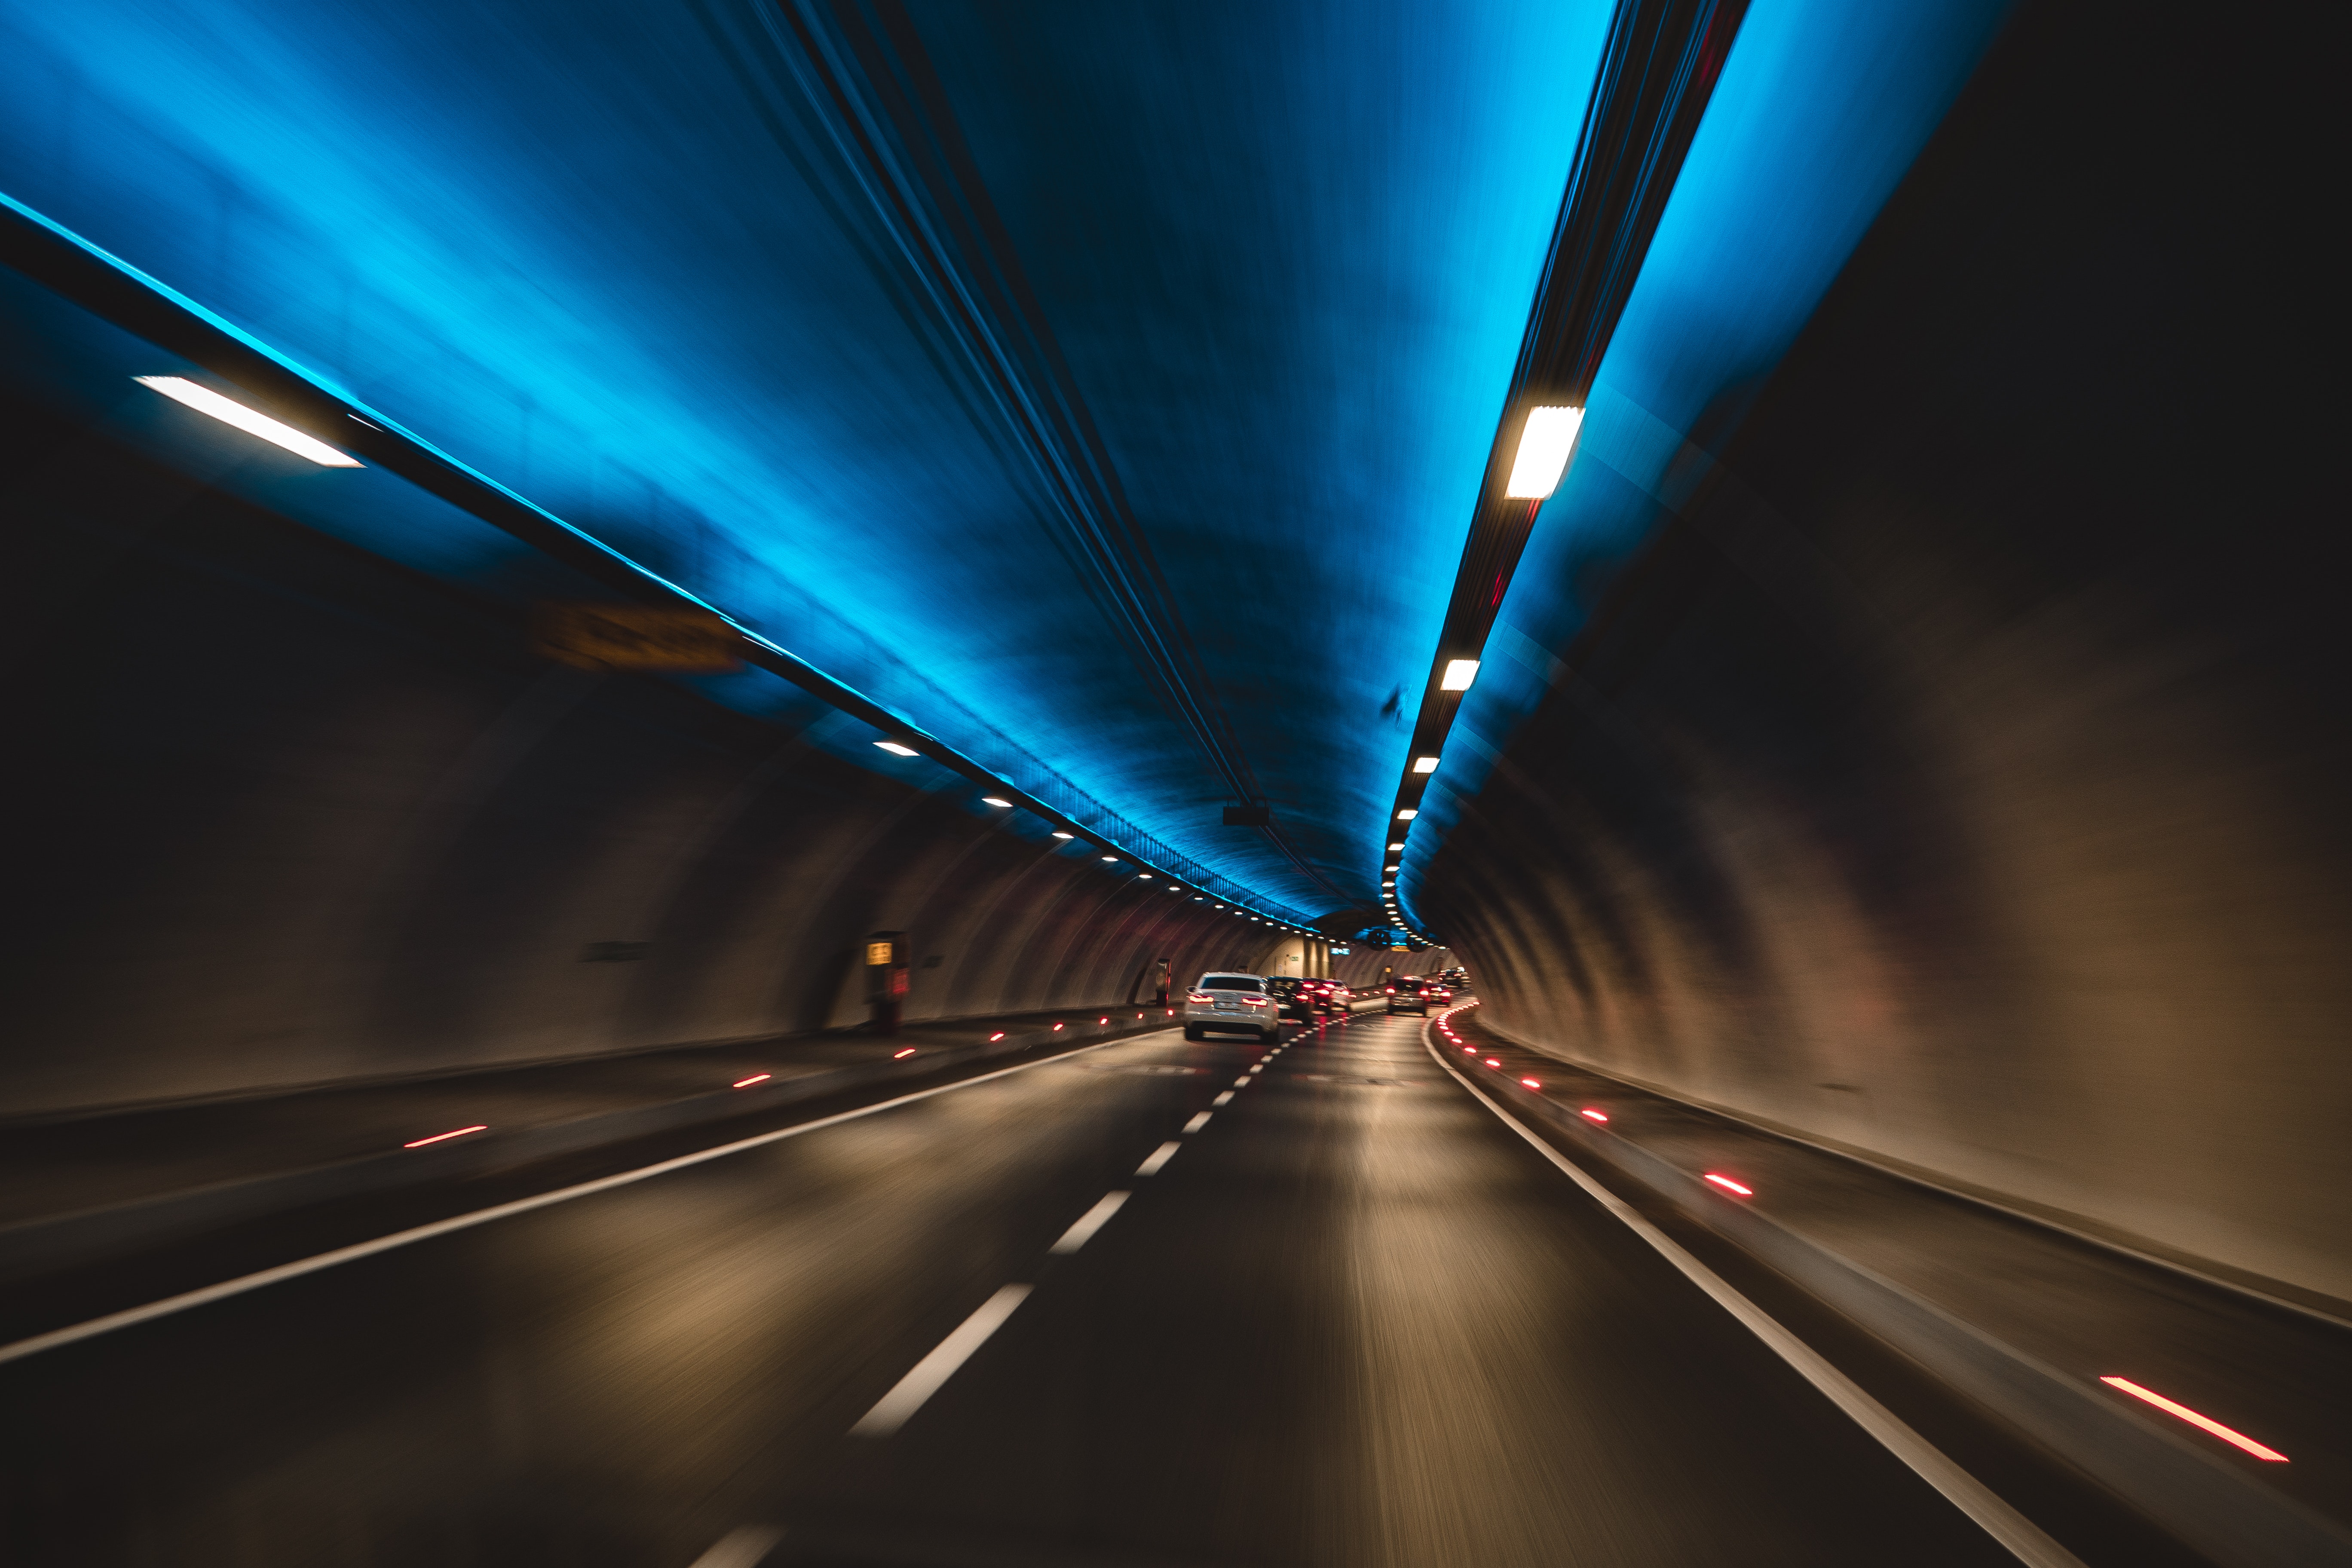 movement, speed, backlight, cars, tunnel, cities, traffic, illumination